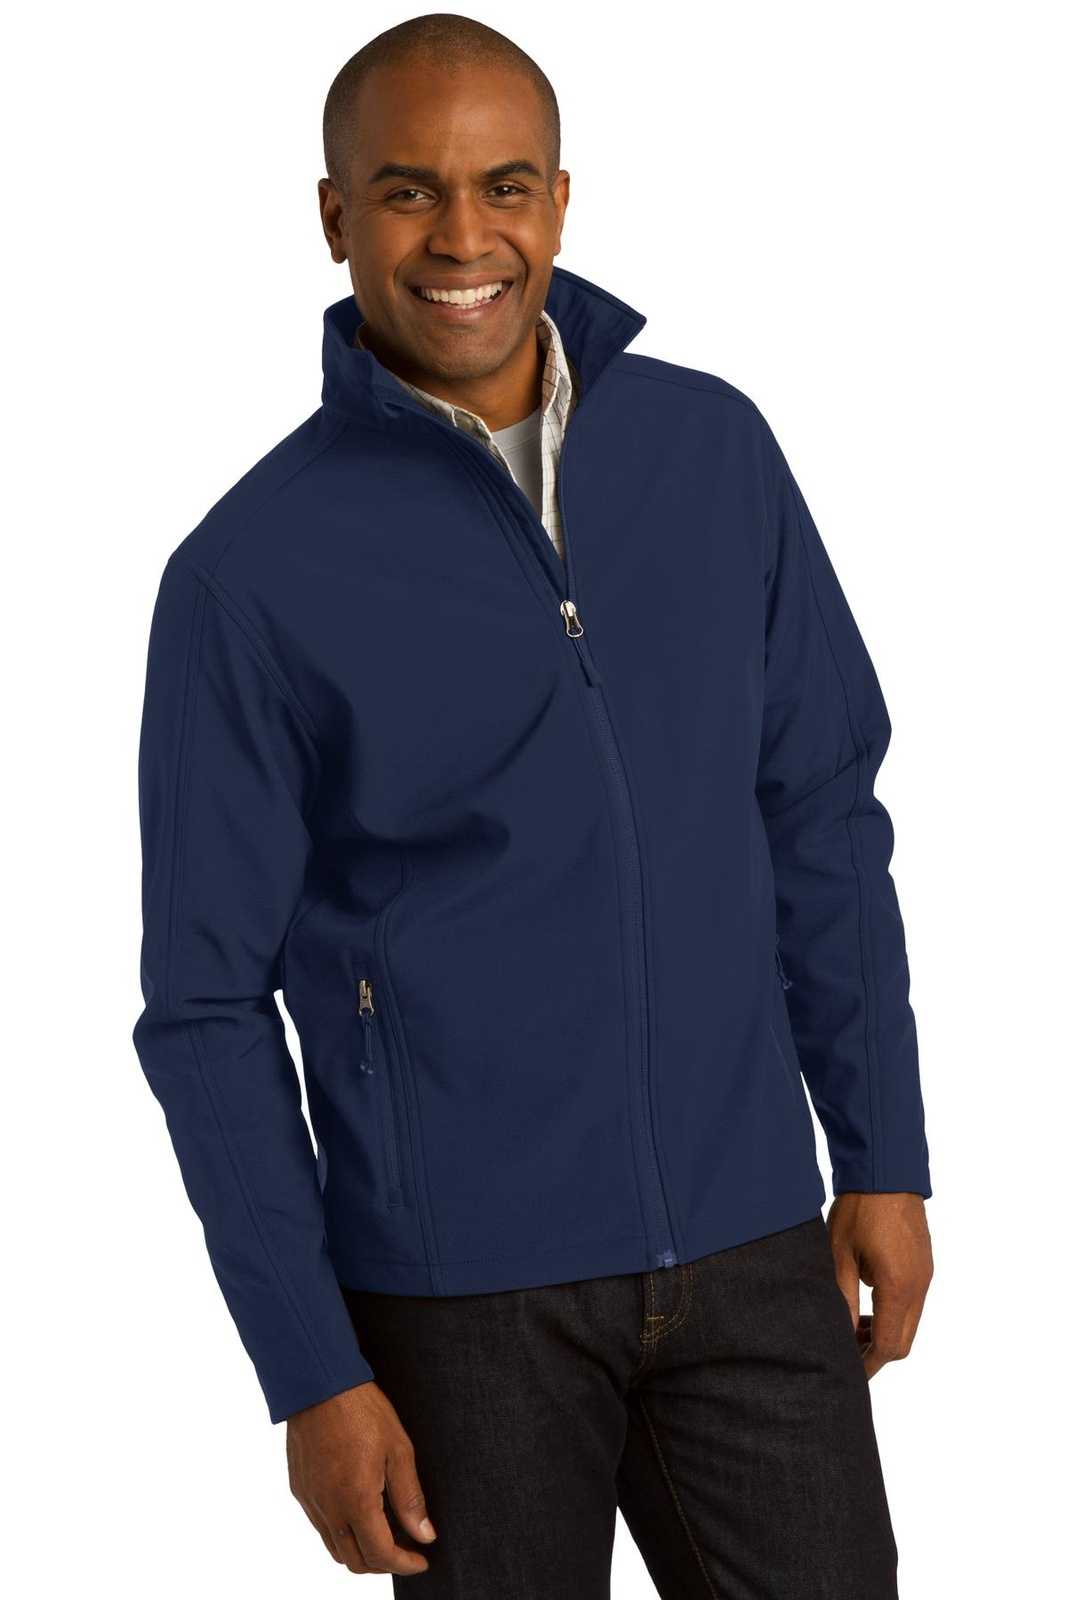 Port Authority J317 Core Soft Shell Jacket - Dress Blue Navy - HIT a Double - 4